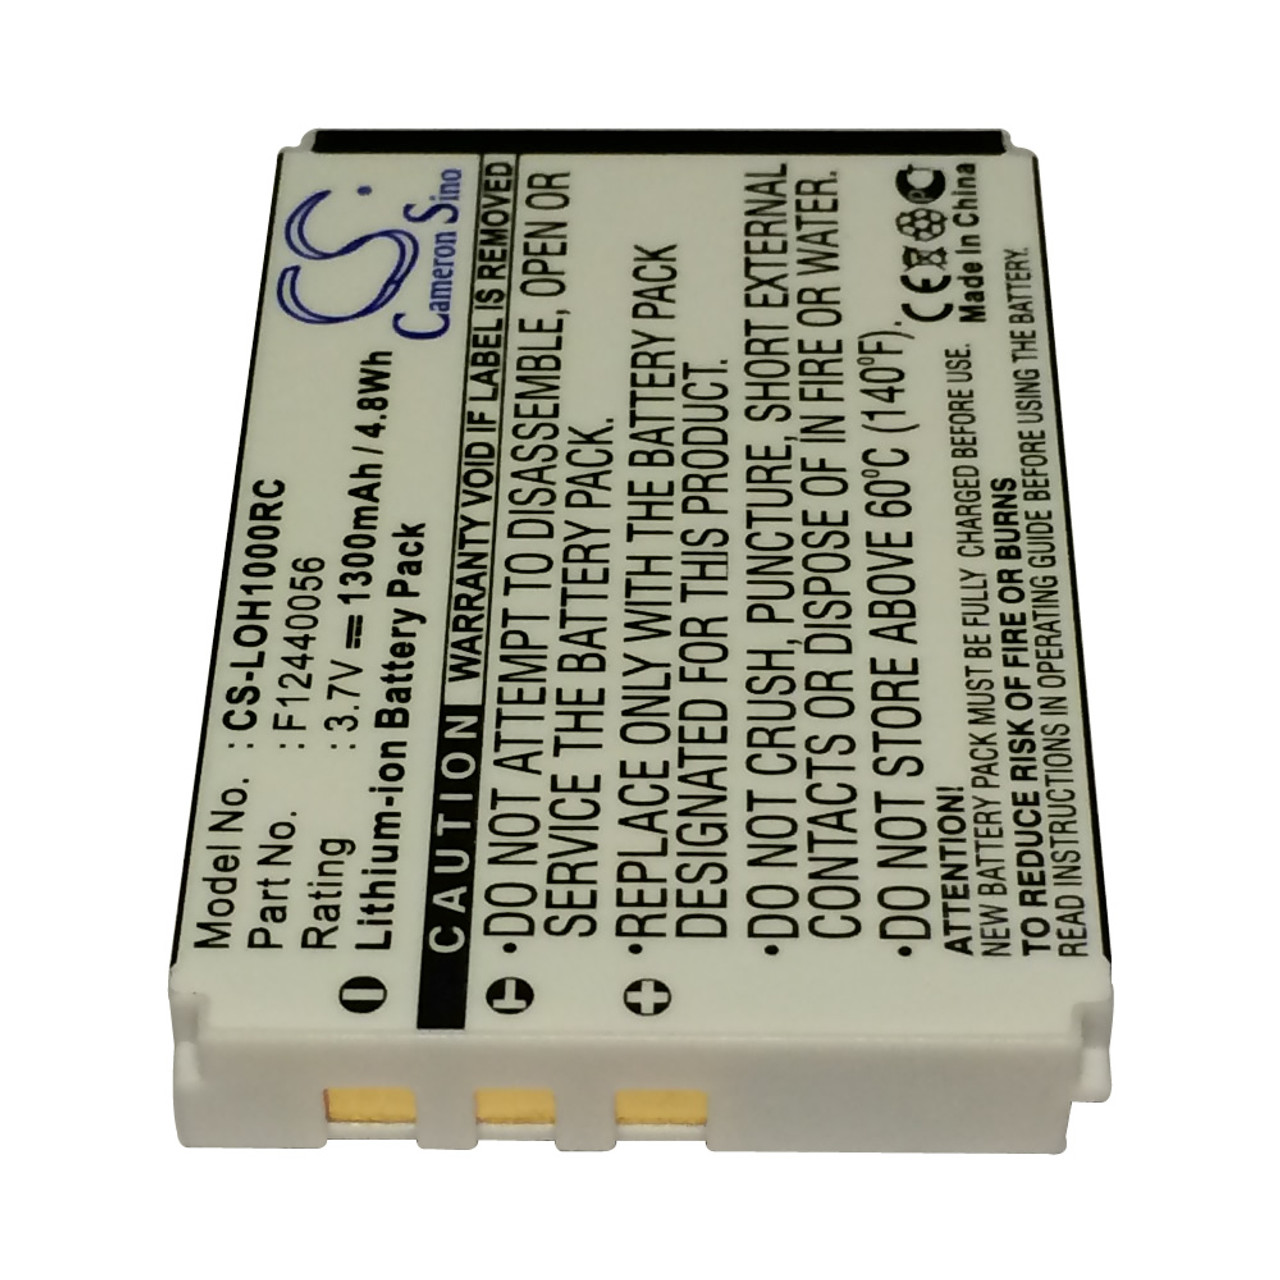 Logitech Harmony 915 Remote Control Battery